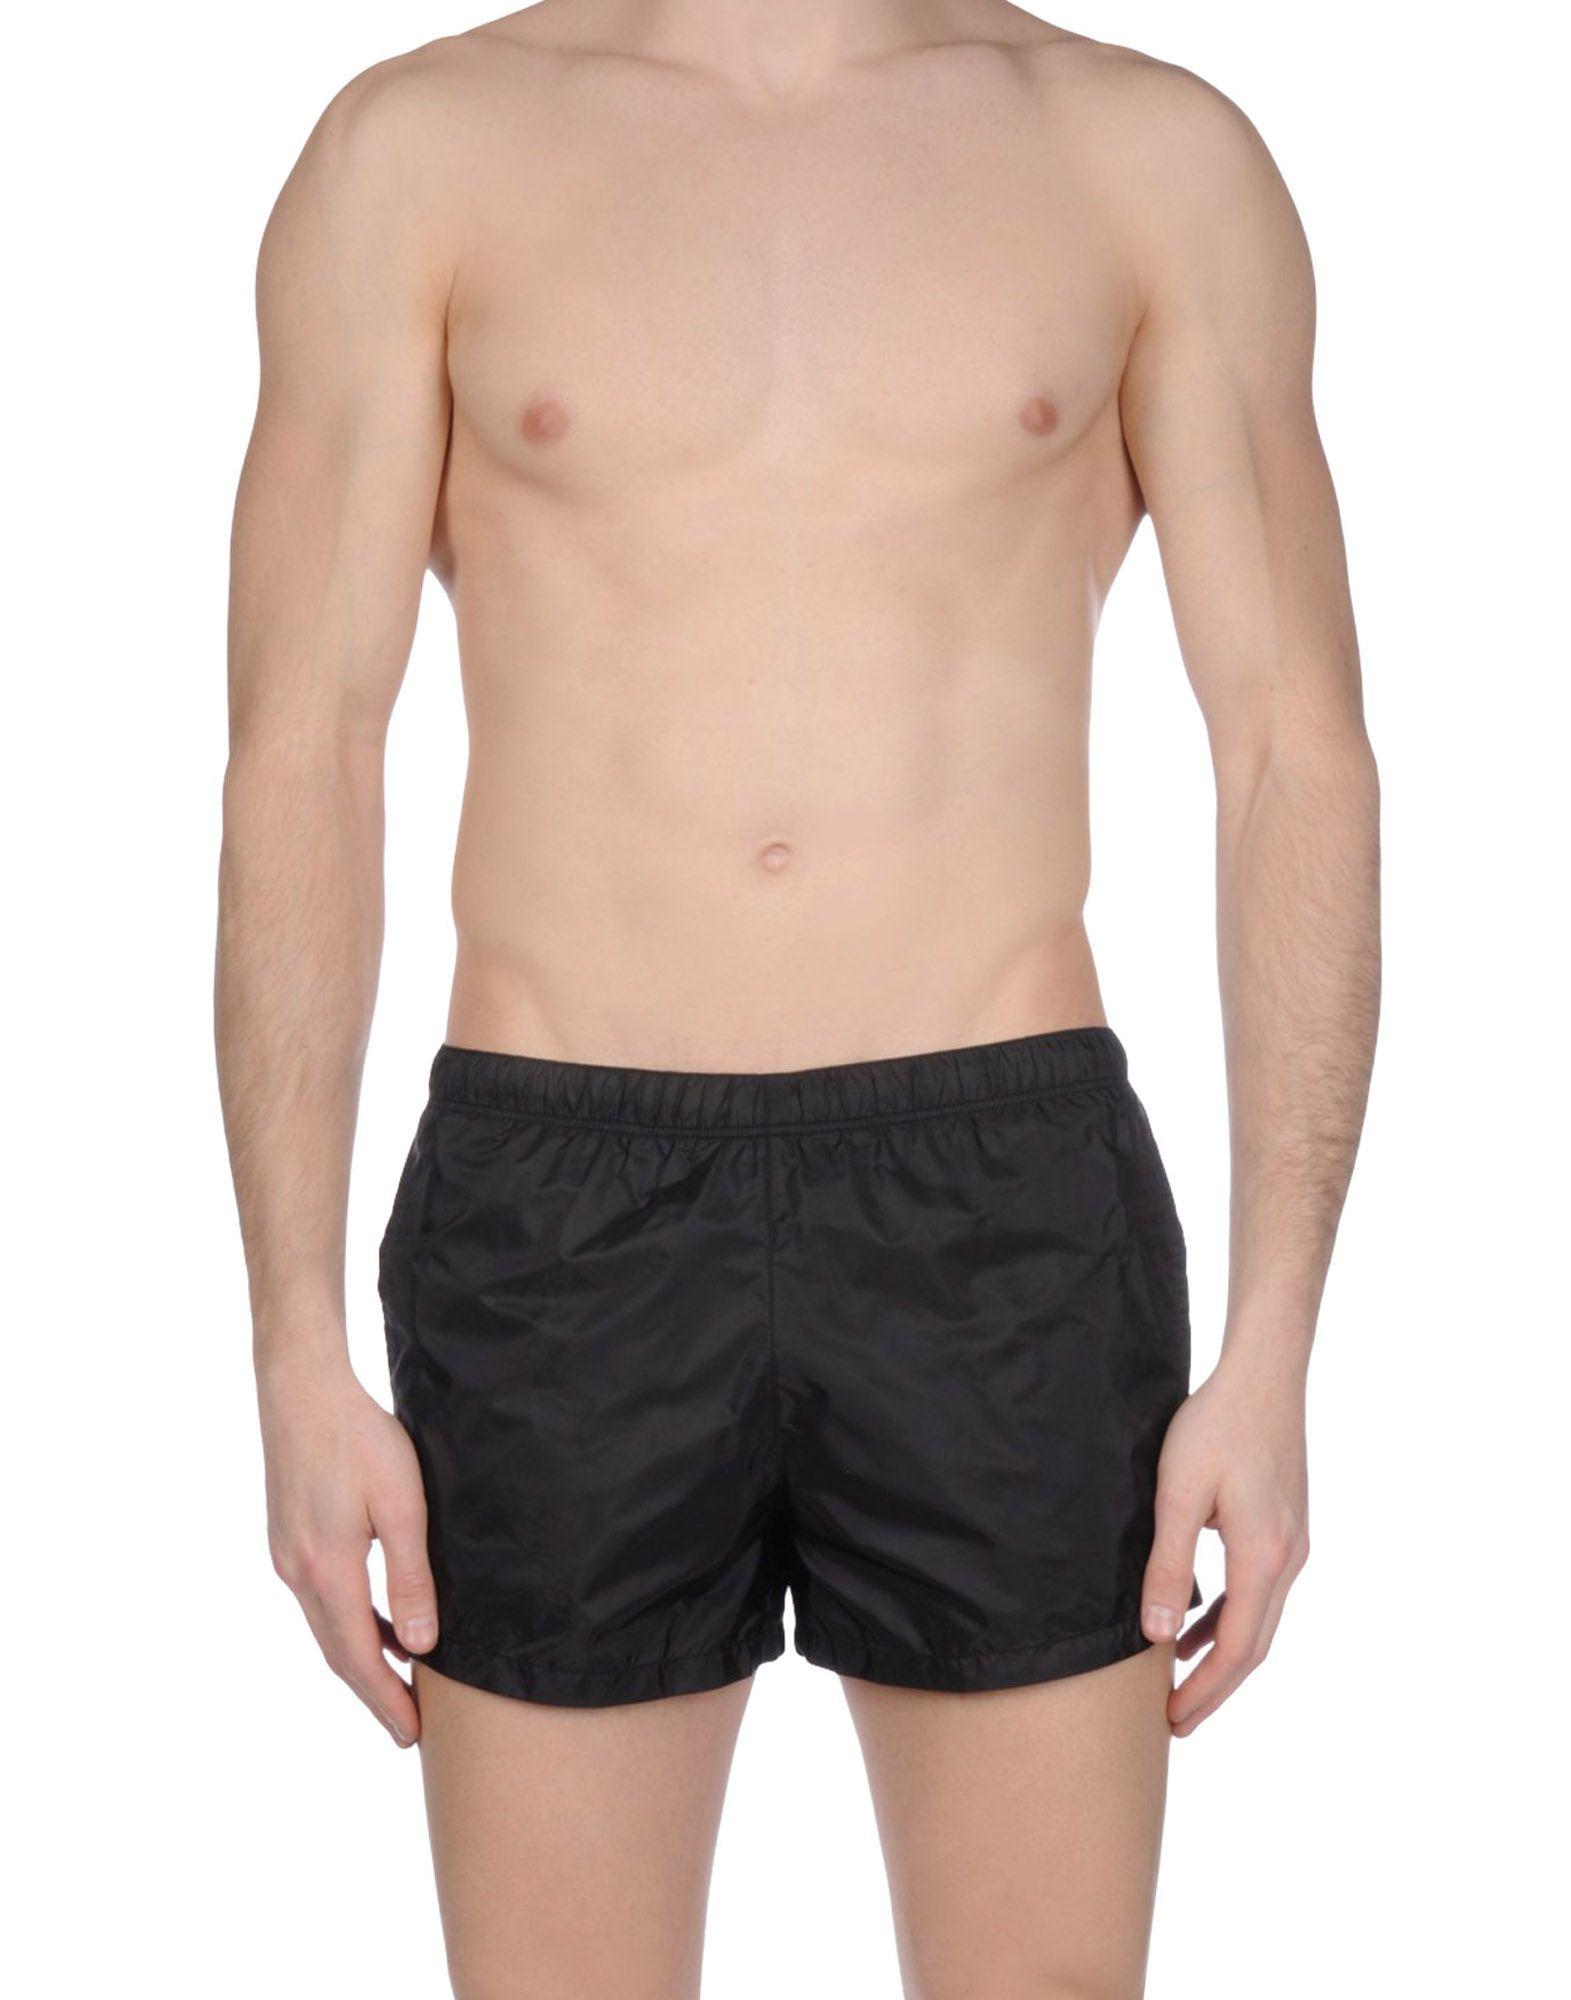 Download Lyst - Prada Swimming Trunks in Black for Men